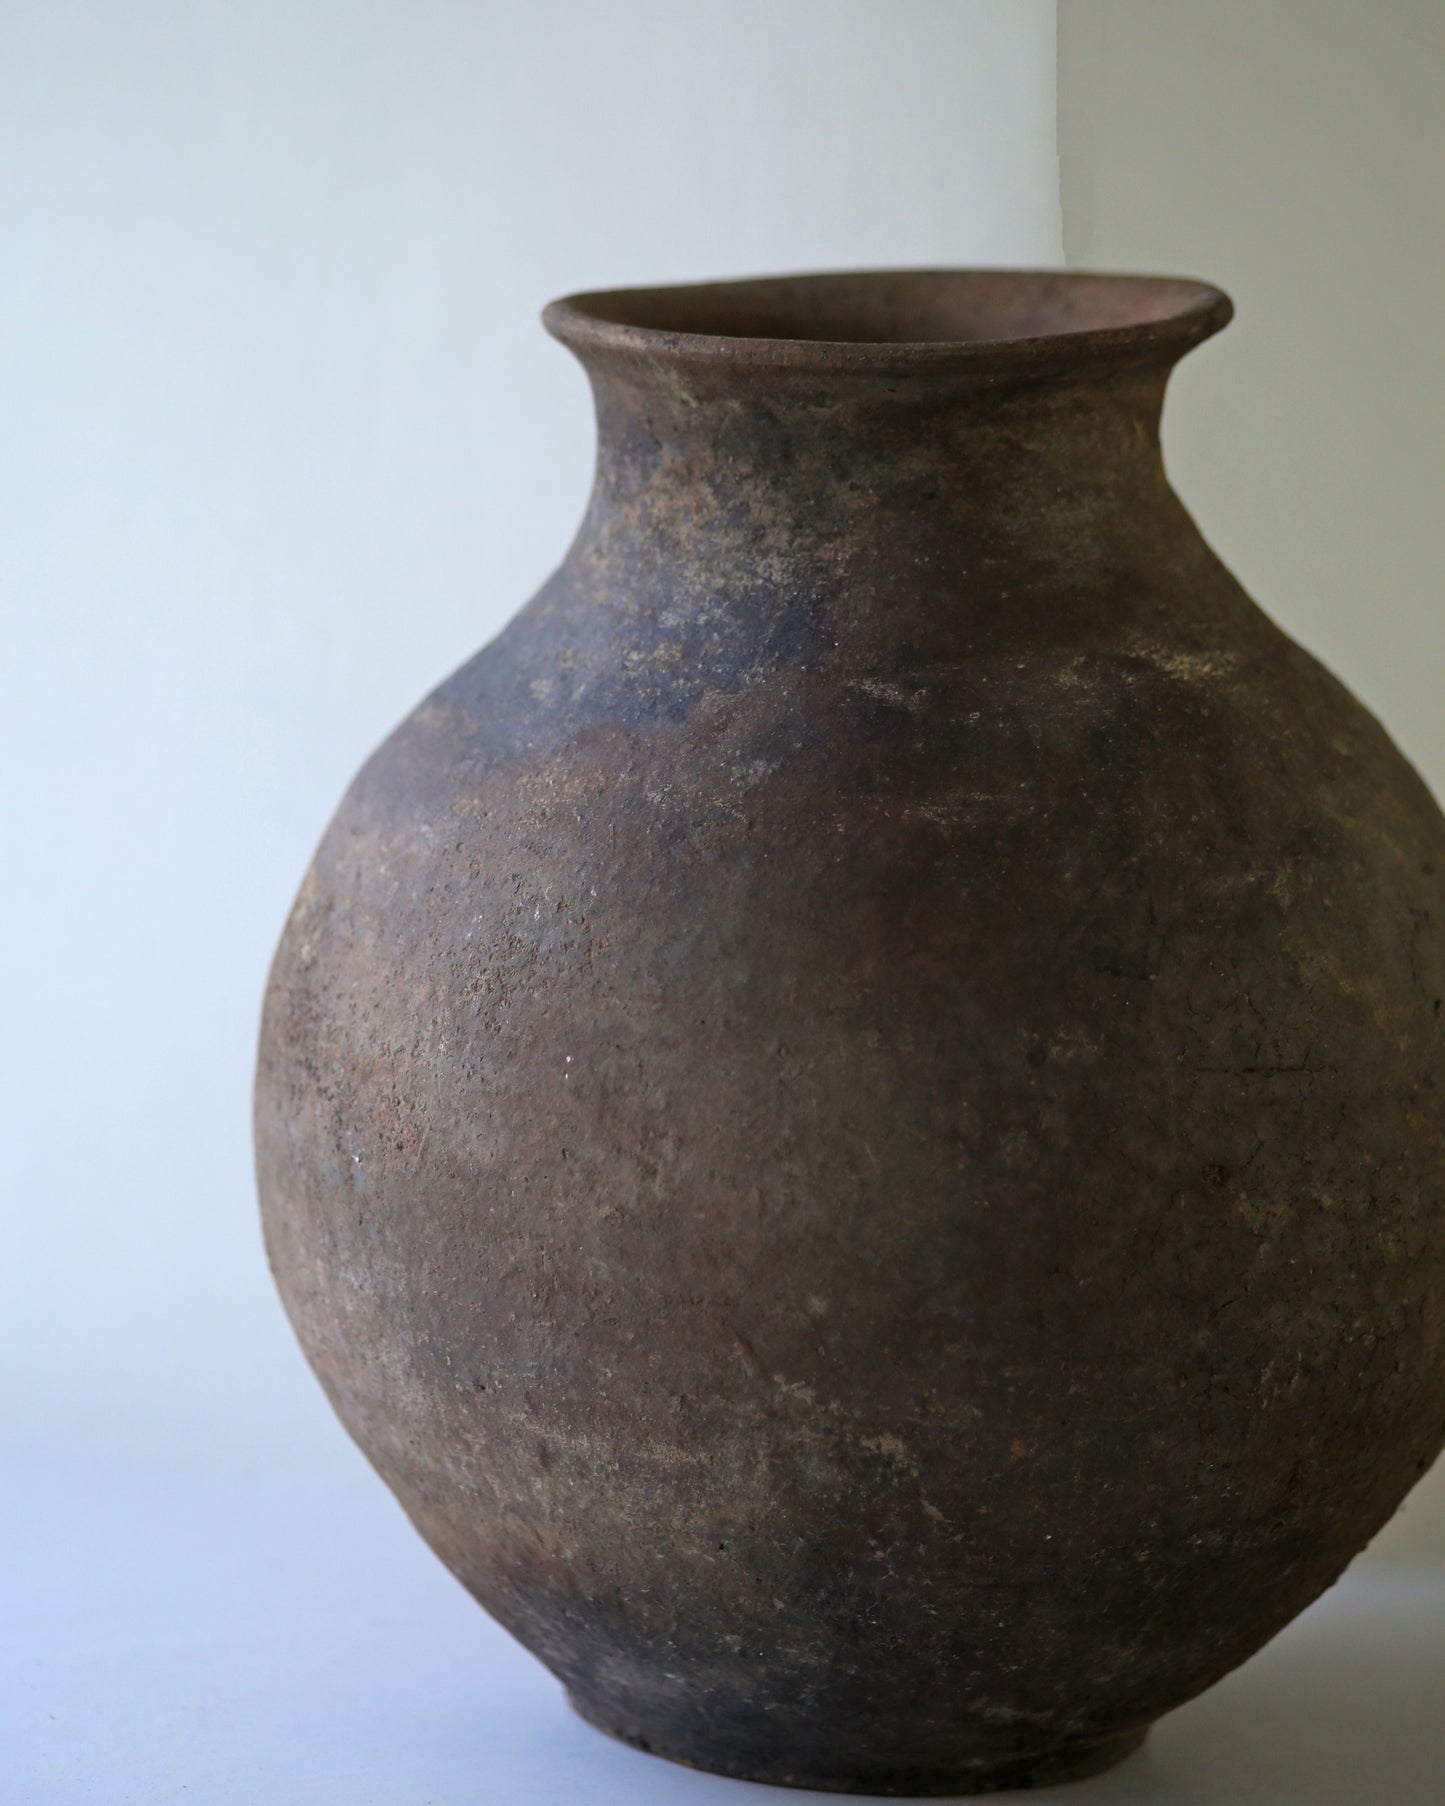 Aged patina on antique pot